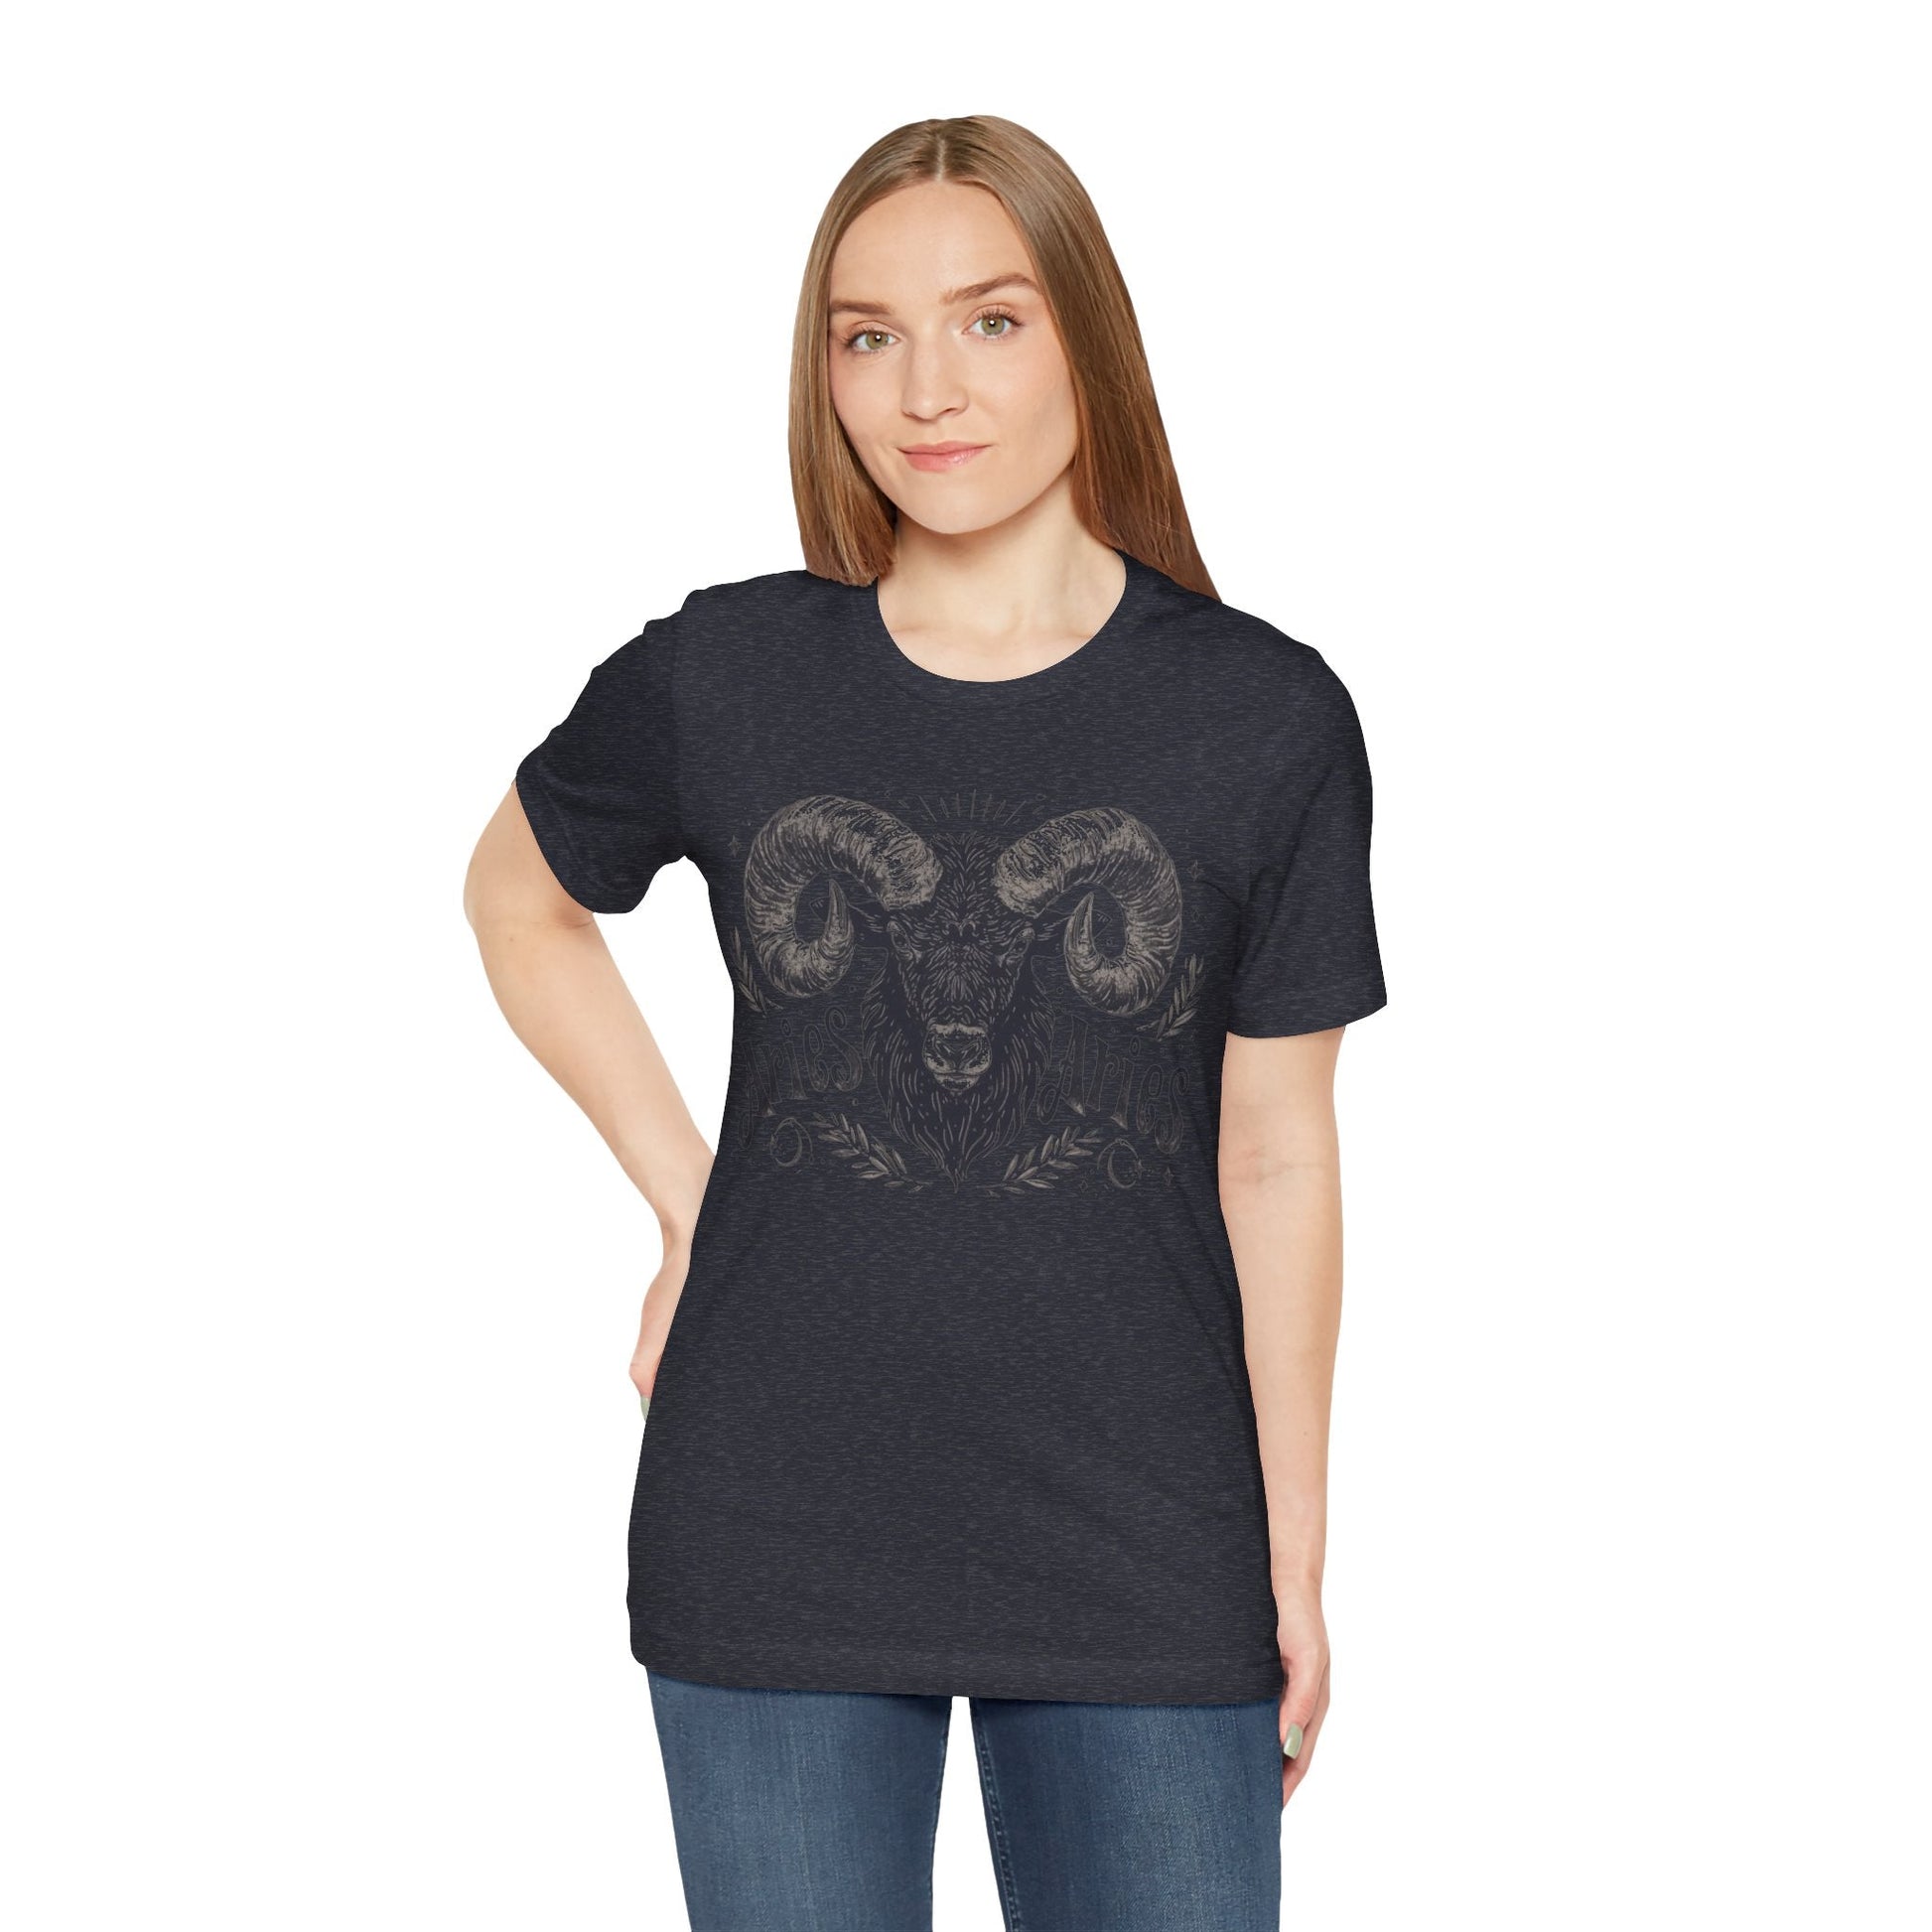 T-Shirt Aries Astrology Unisex TShirt: An Ode to the Maverick